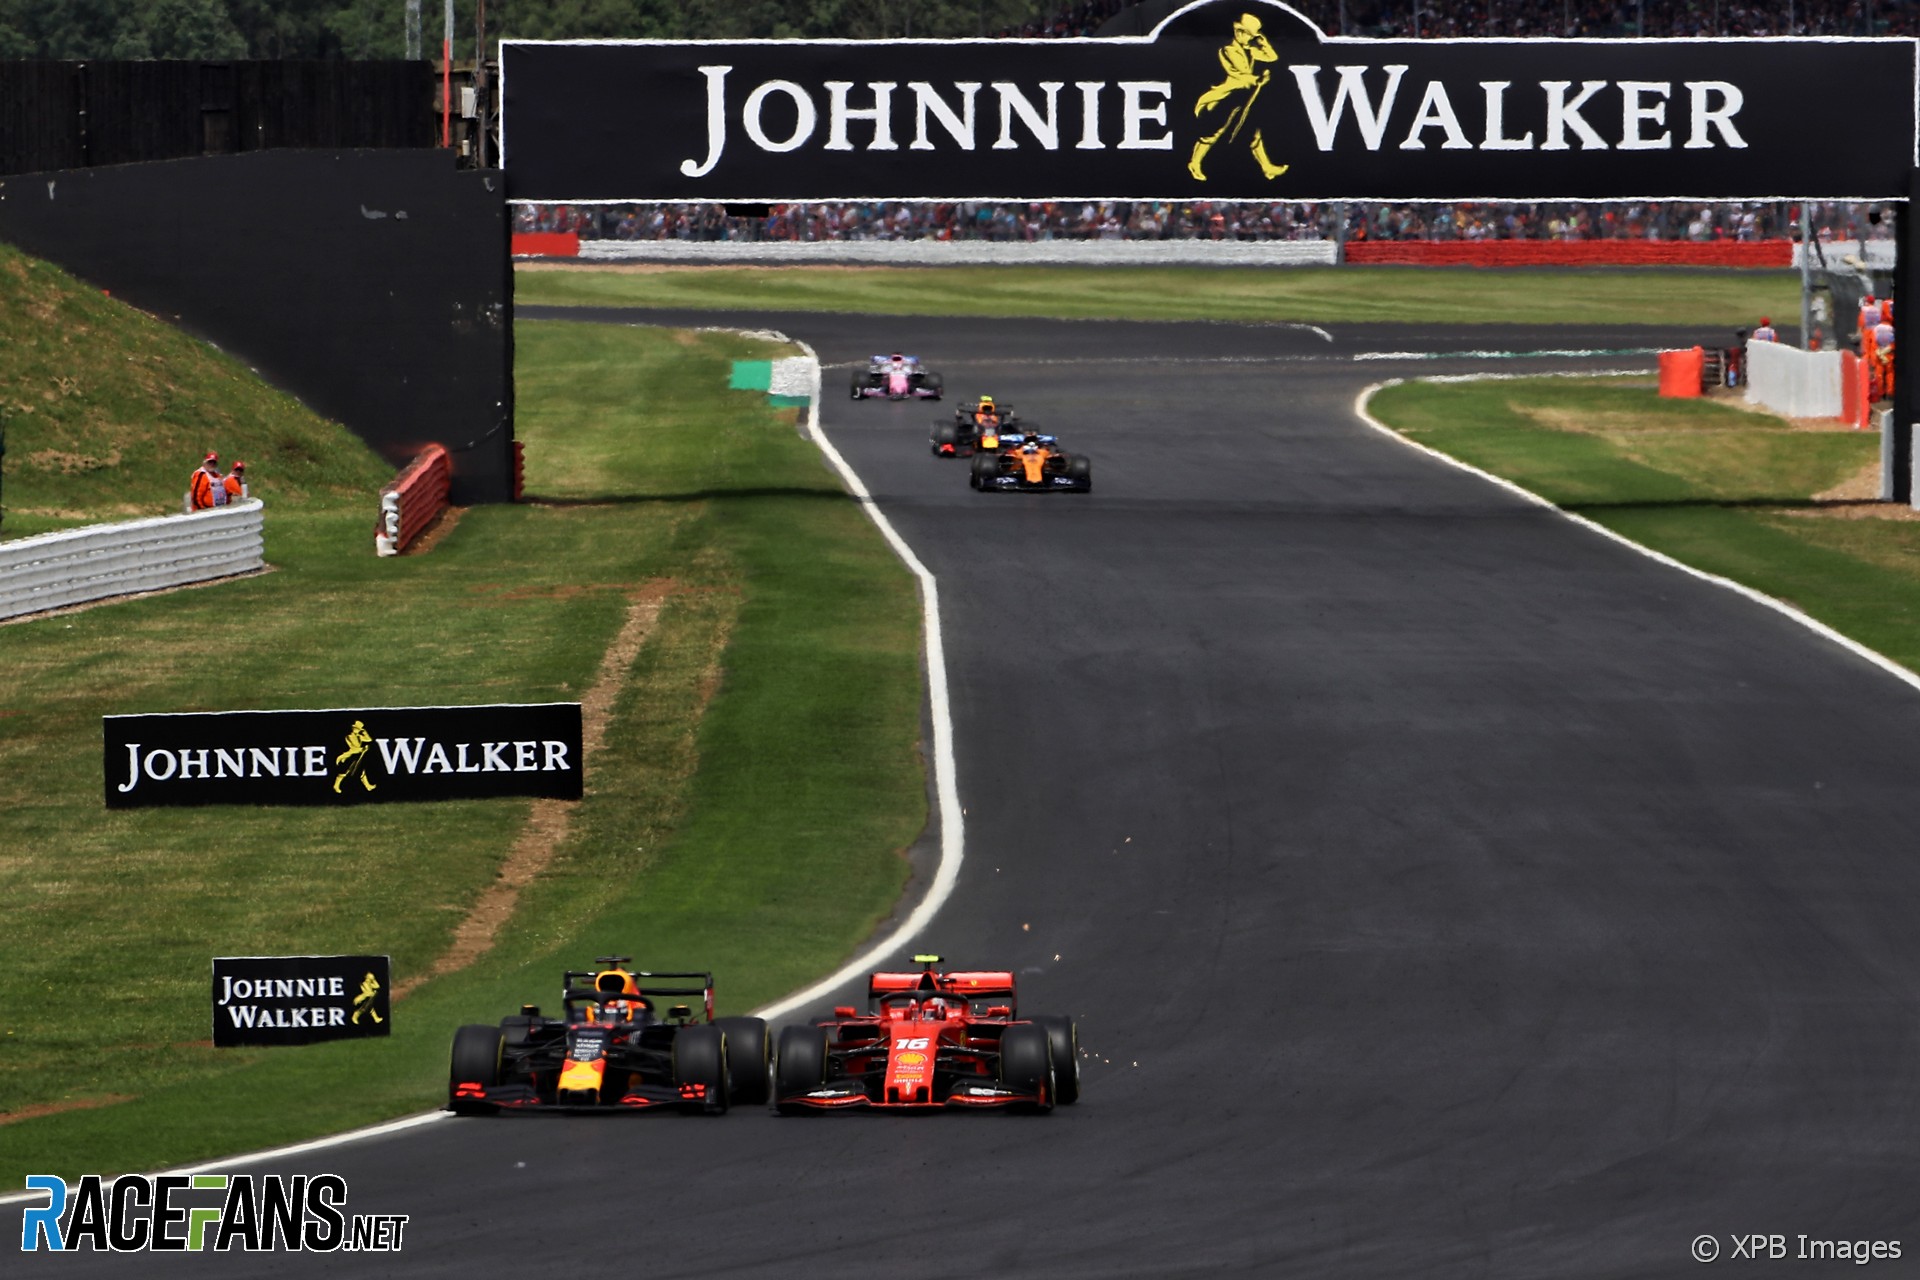 Max Verstappen, Charles Leclerc, Silverstone, 2019